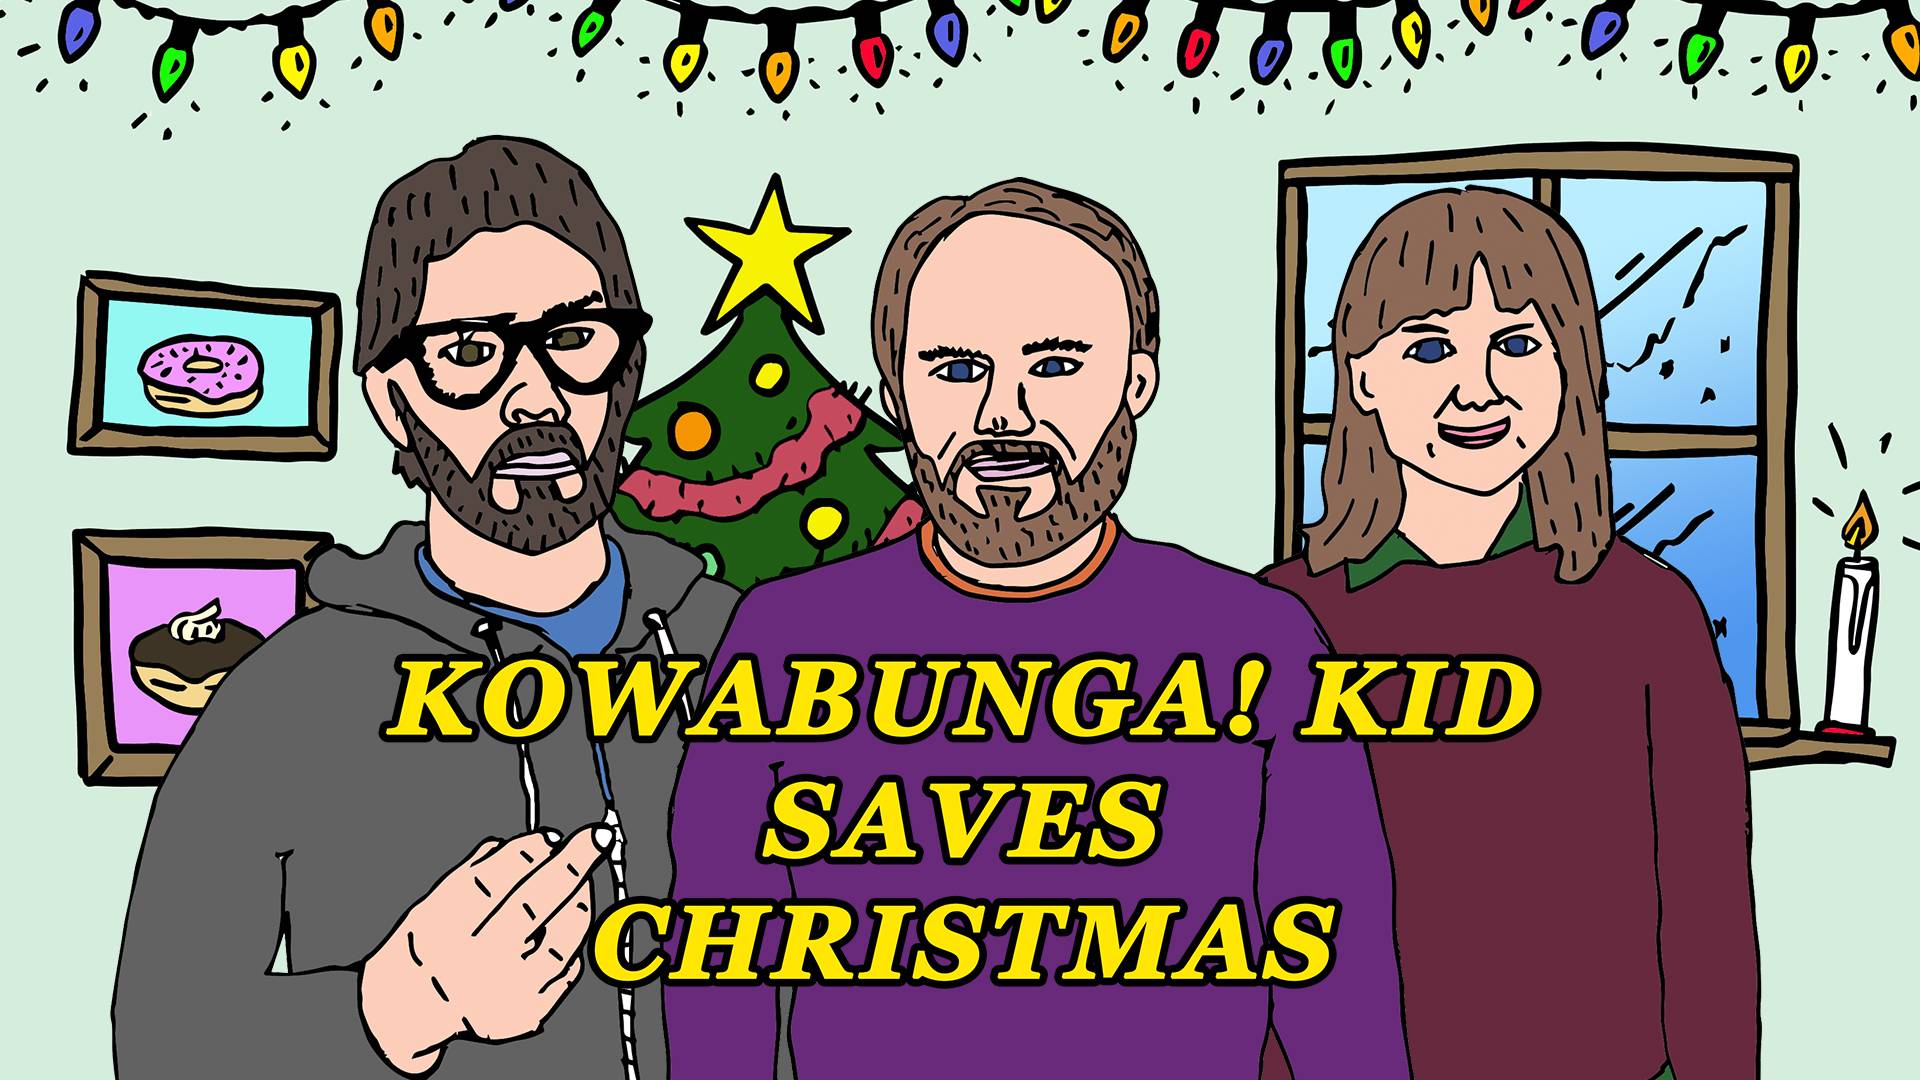 Remembering that time Kowabunga! Kid saved Christmas